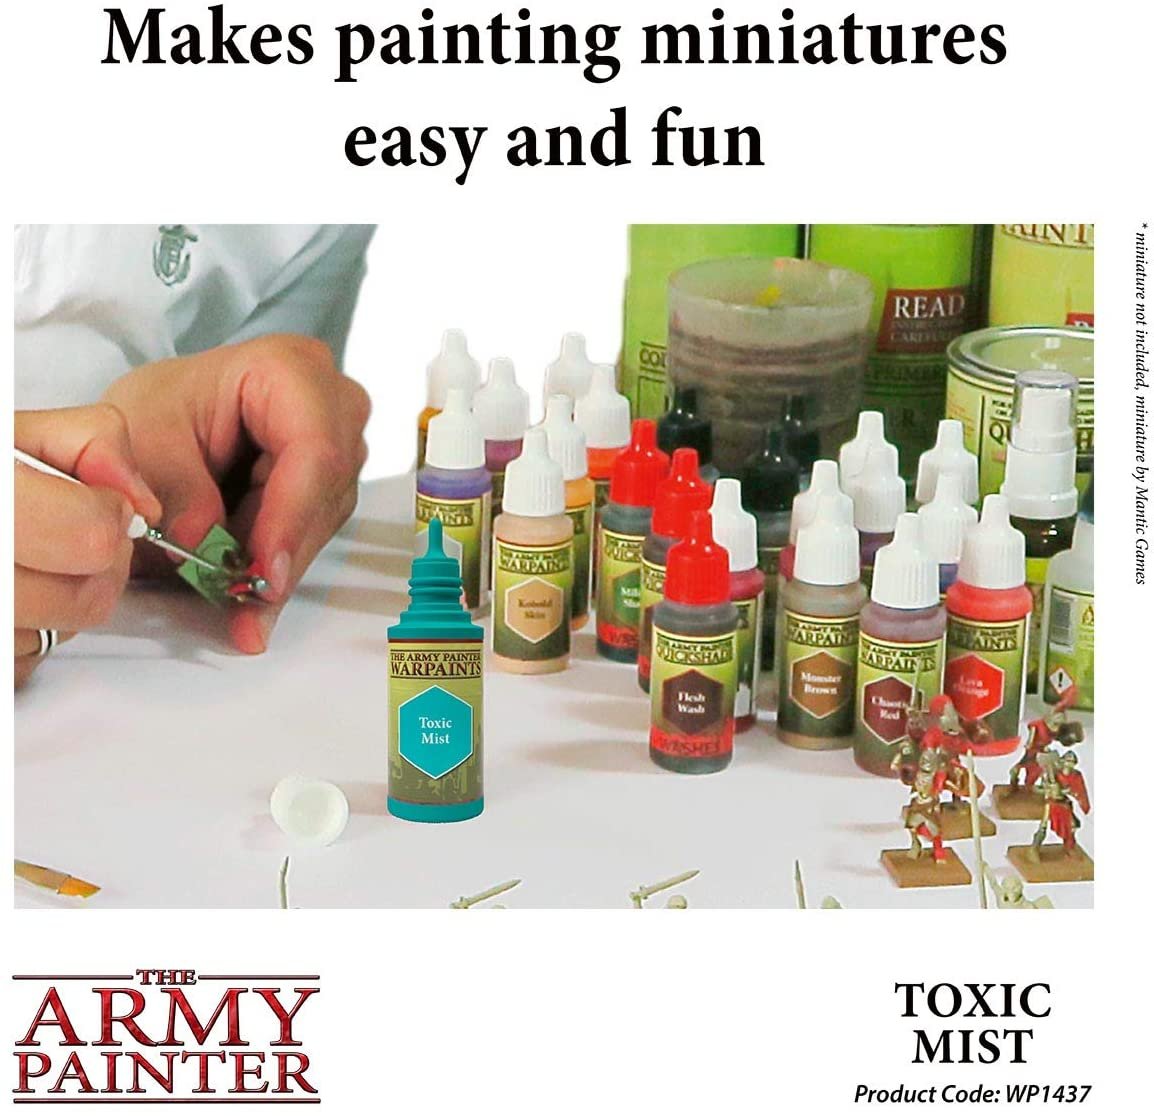 The Army Painter - Warpaints: Toxic Mist (18ml/0.6oz)